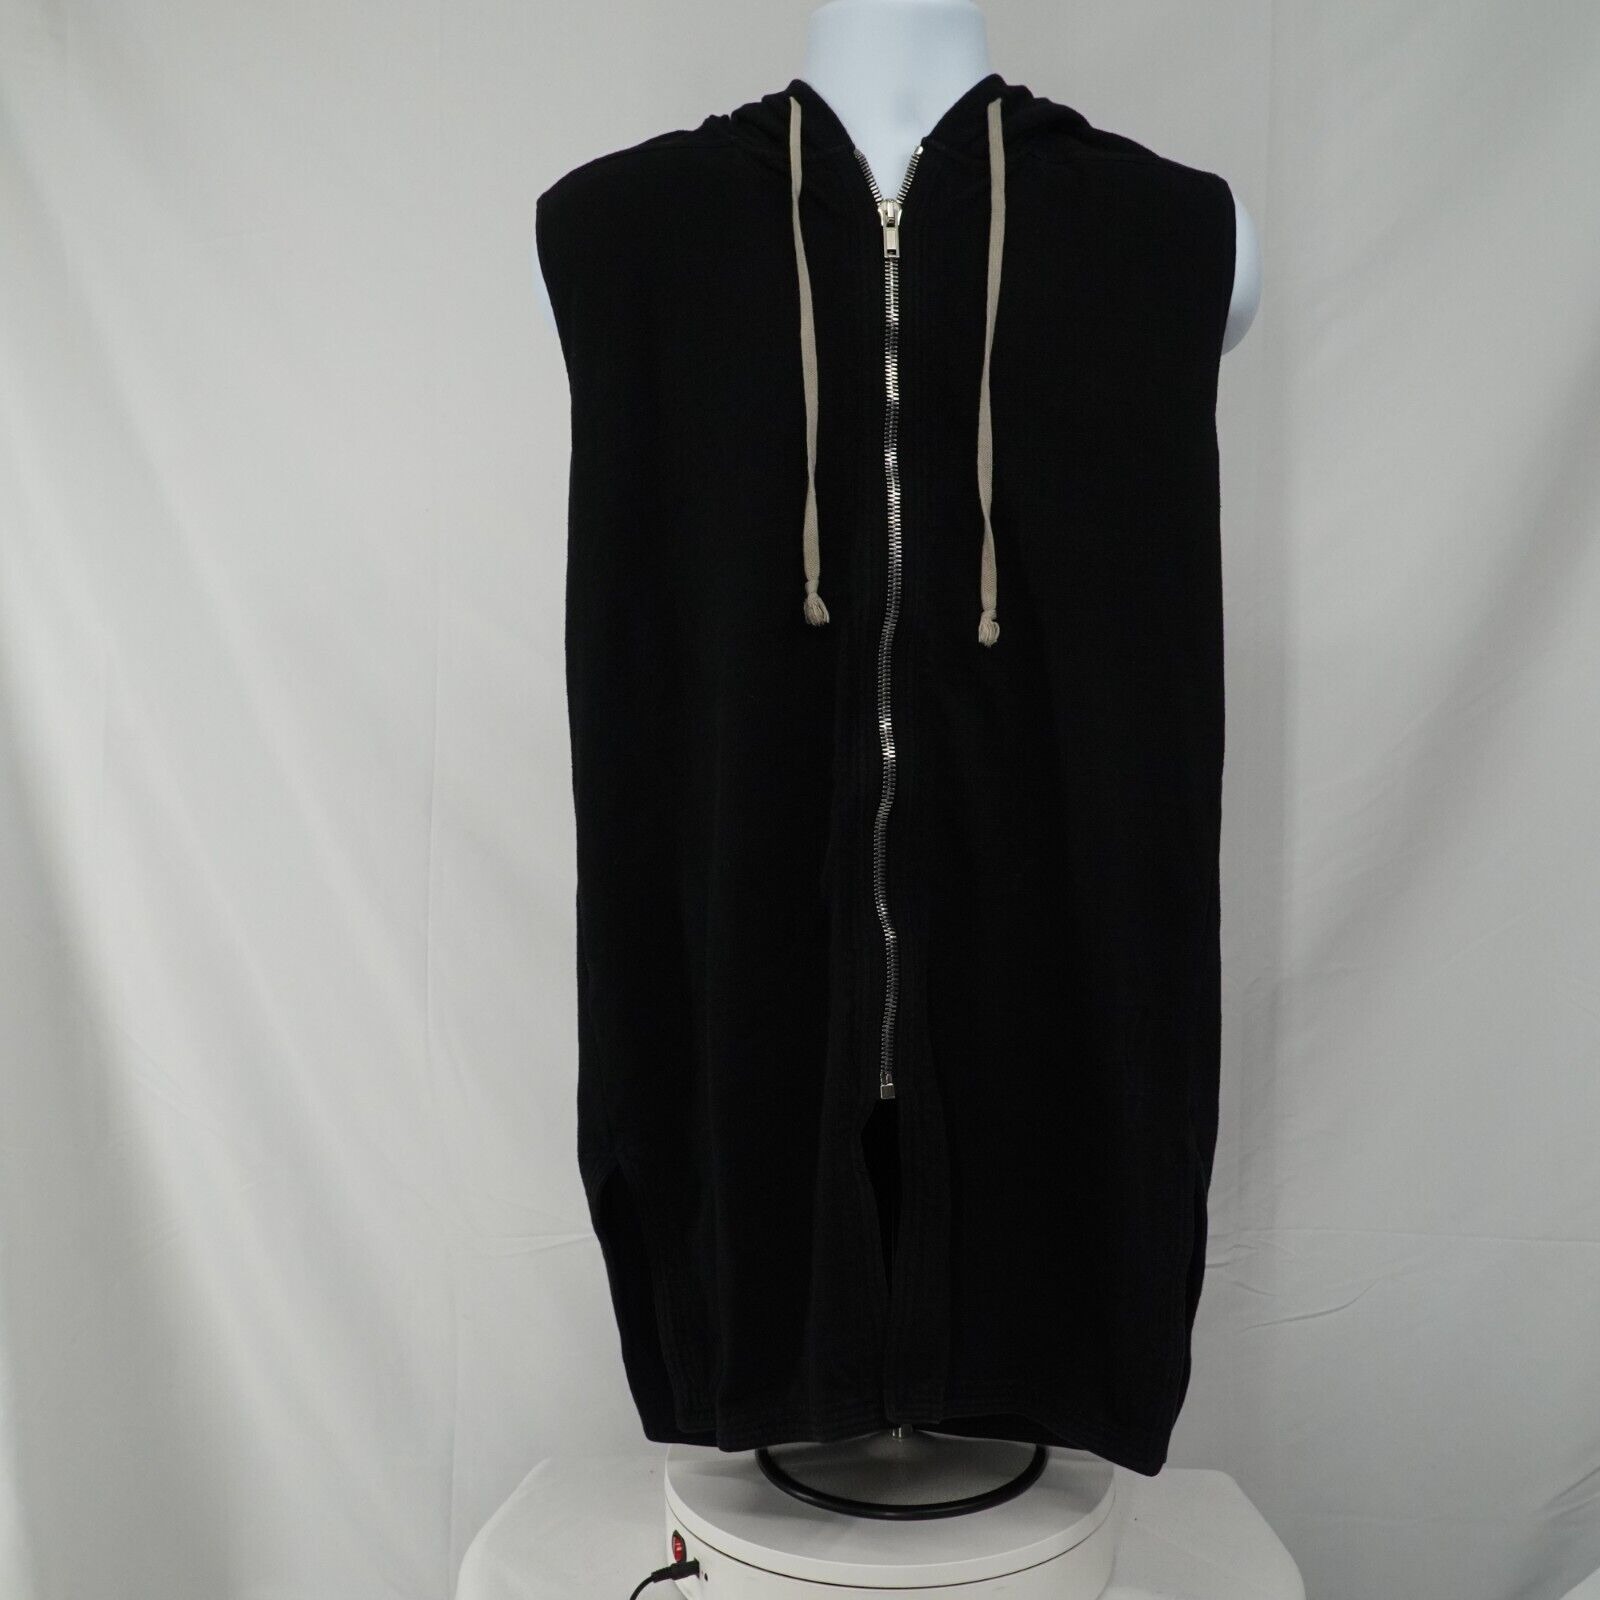 Black Zip Up Sleeveless Jacket Hoodie Cotton - Medium - 22